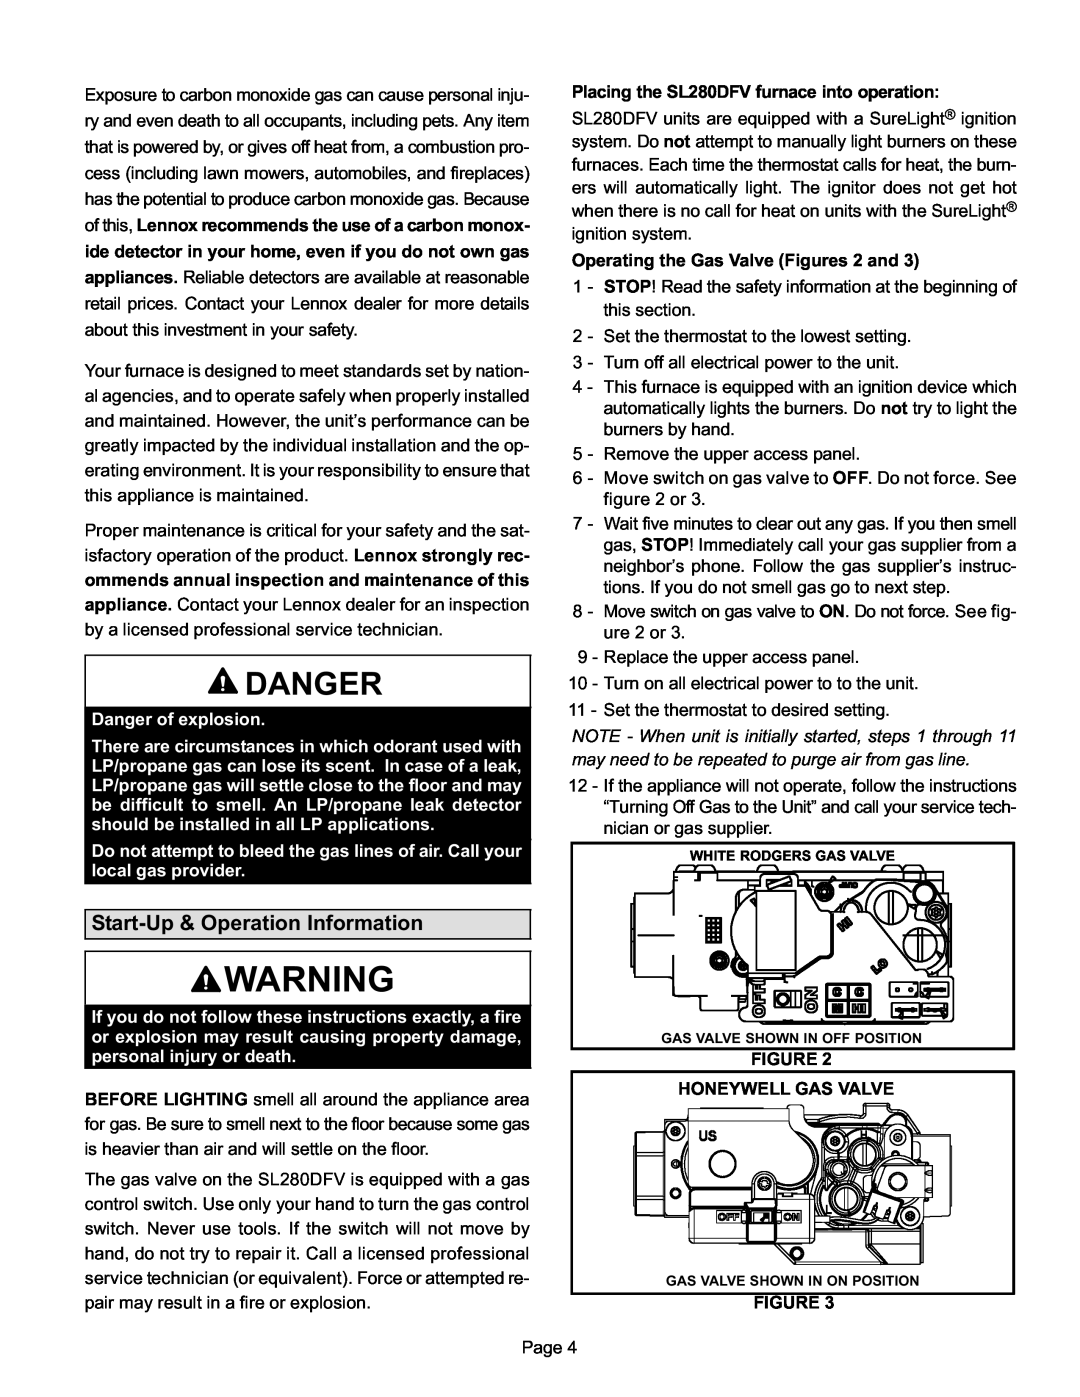 Lennox International Inc SL280DFV manual Danger, Start−Up & Operation Information 